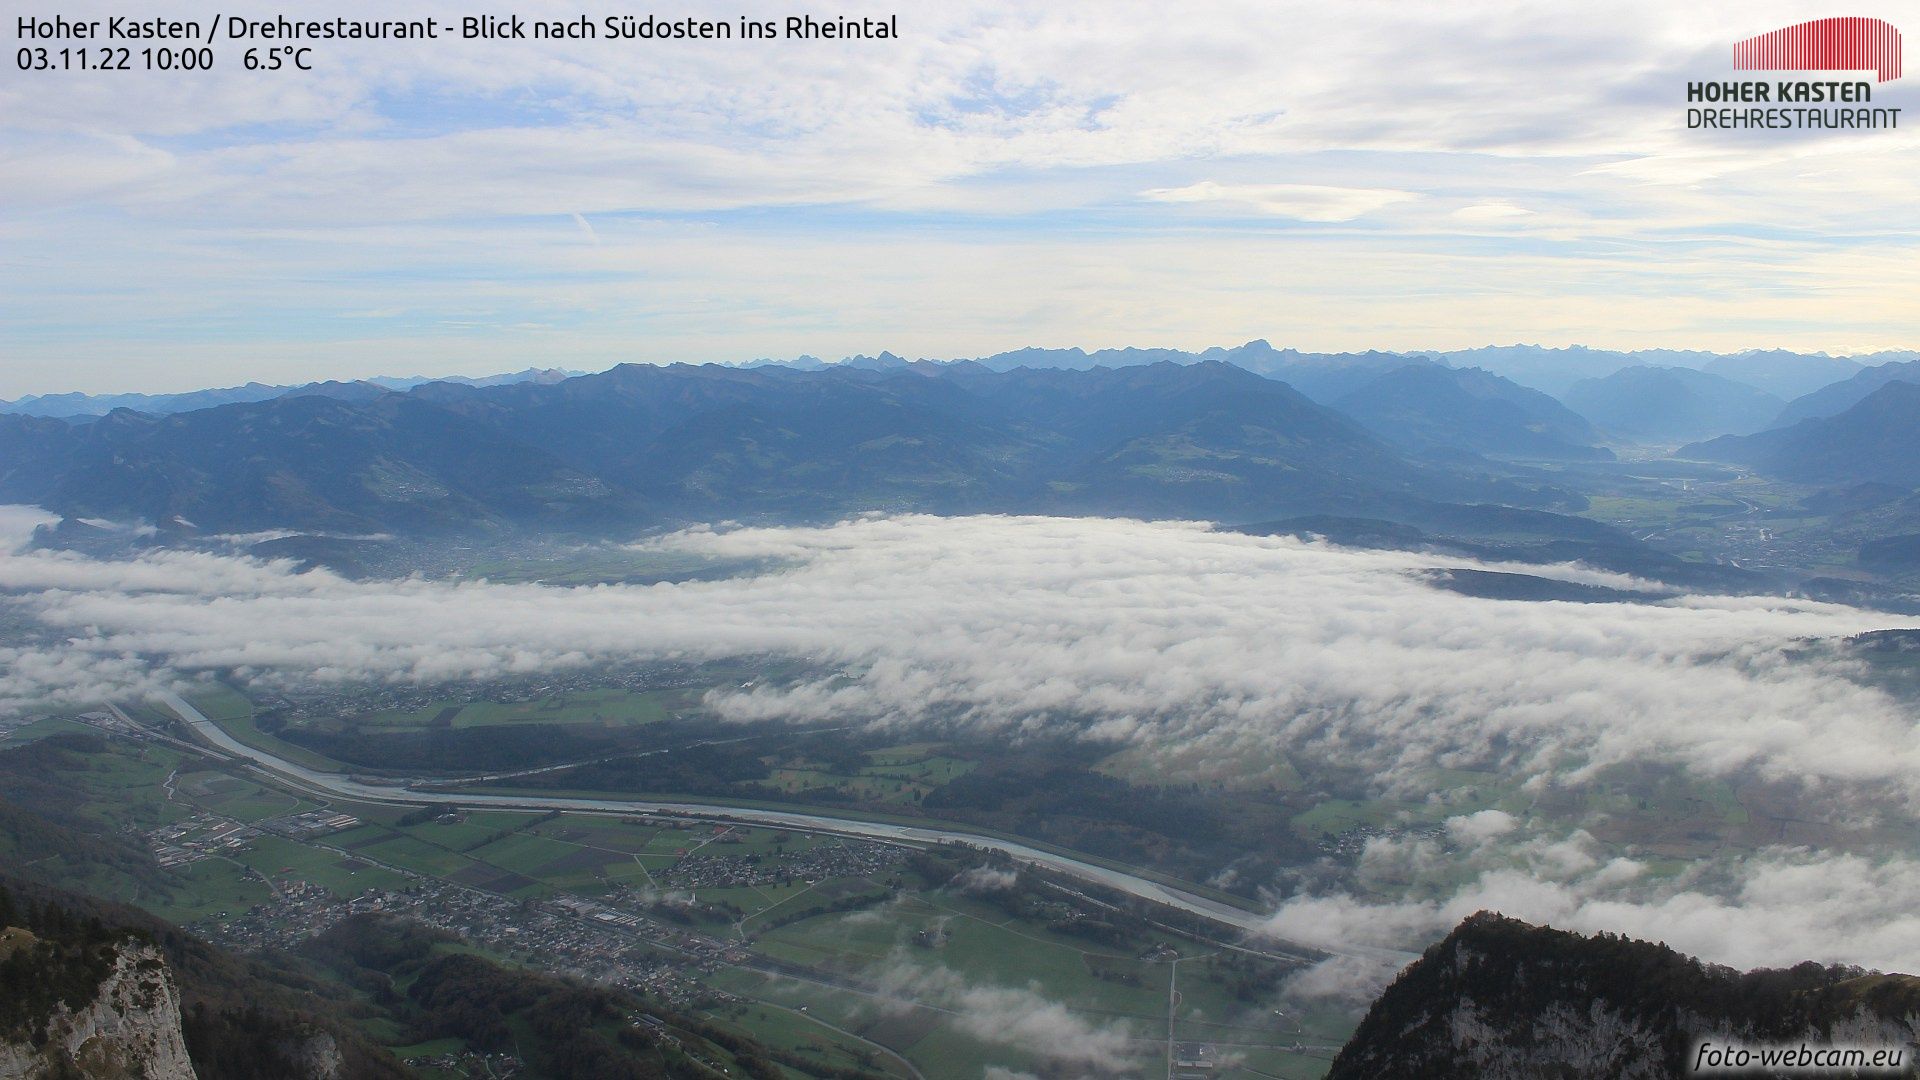 Low-stratus in the Rhine Valley with föhn flow above it (foto-webcam.eu)